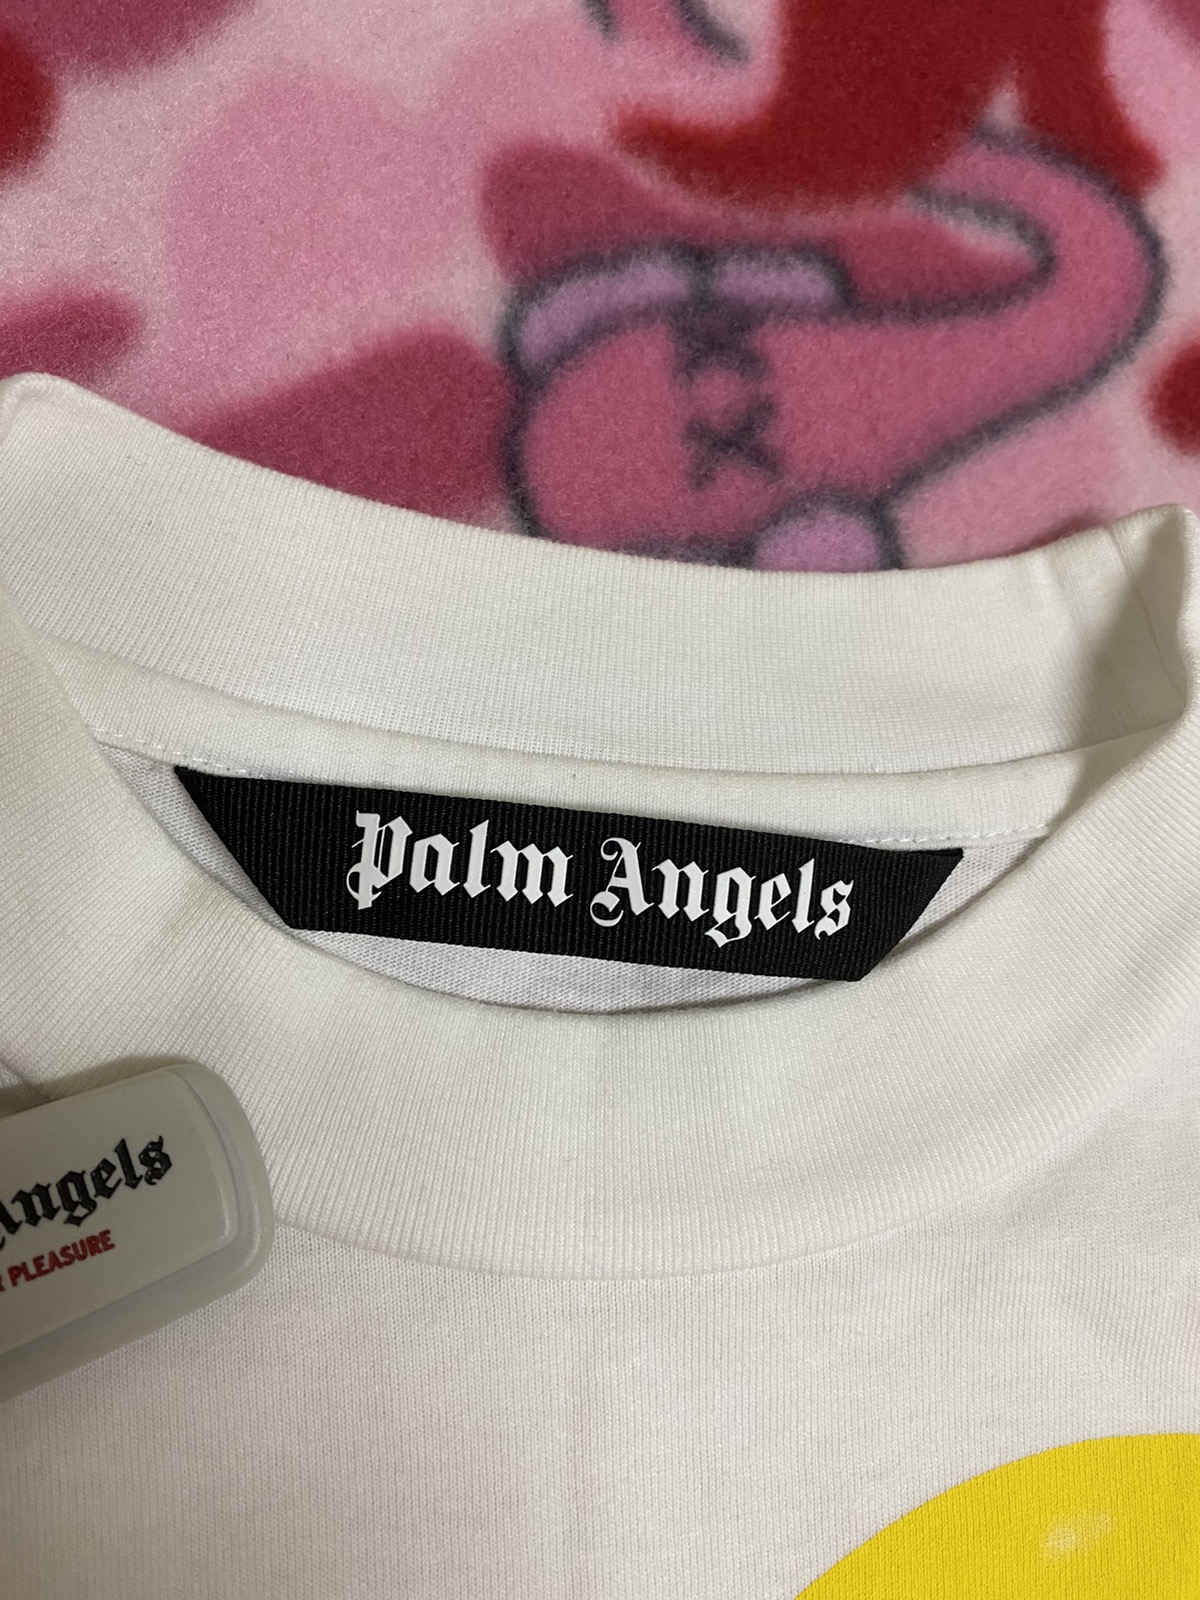 Palm Angels Juggler Pin Up Oversize Tee T-shirt - 4